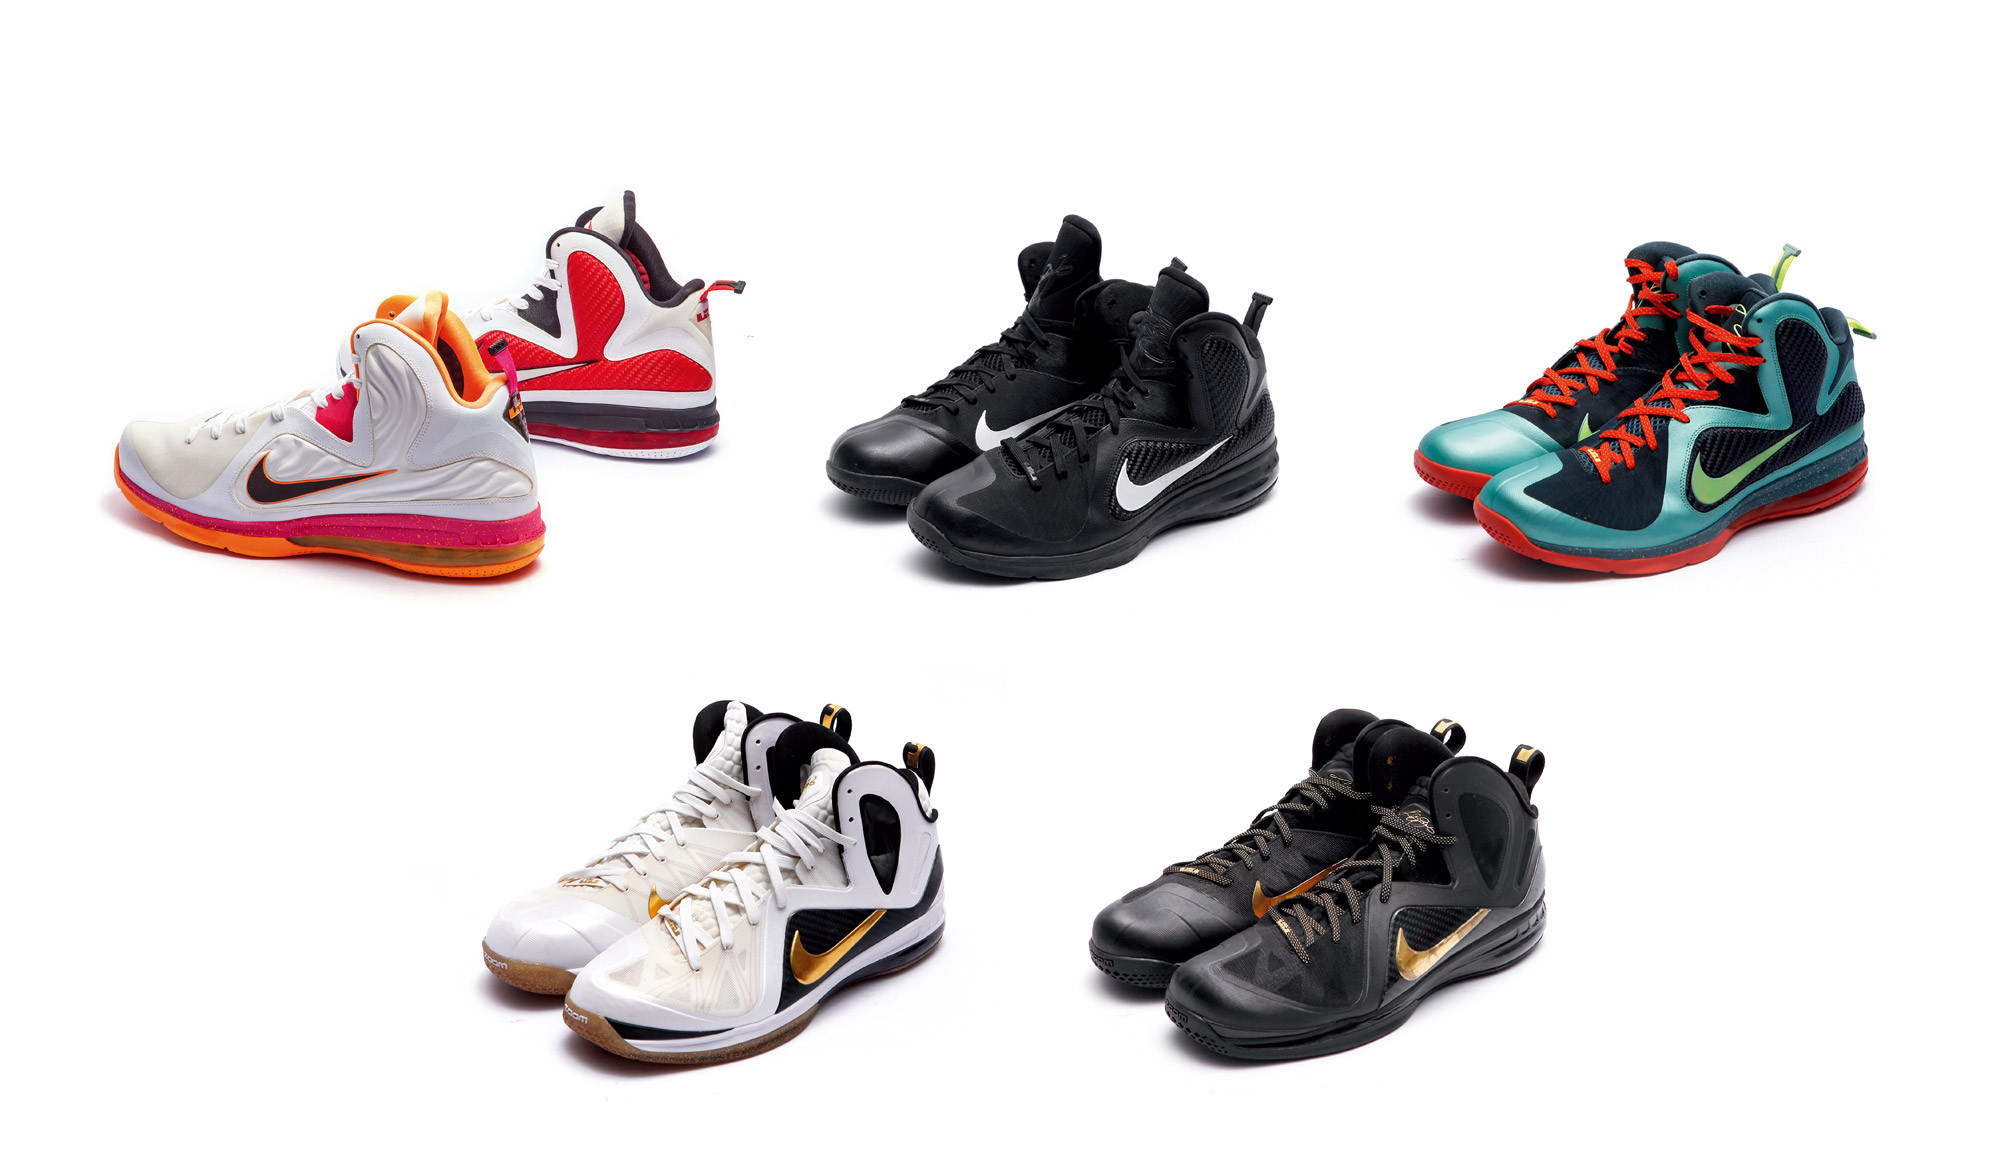 Nike LEBRON IX PE Collection